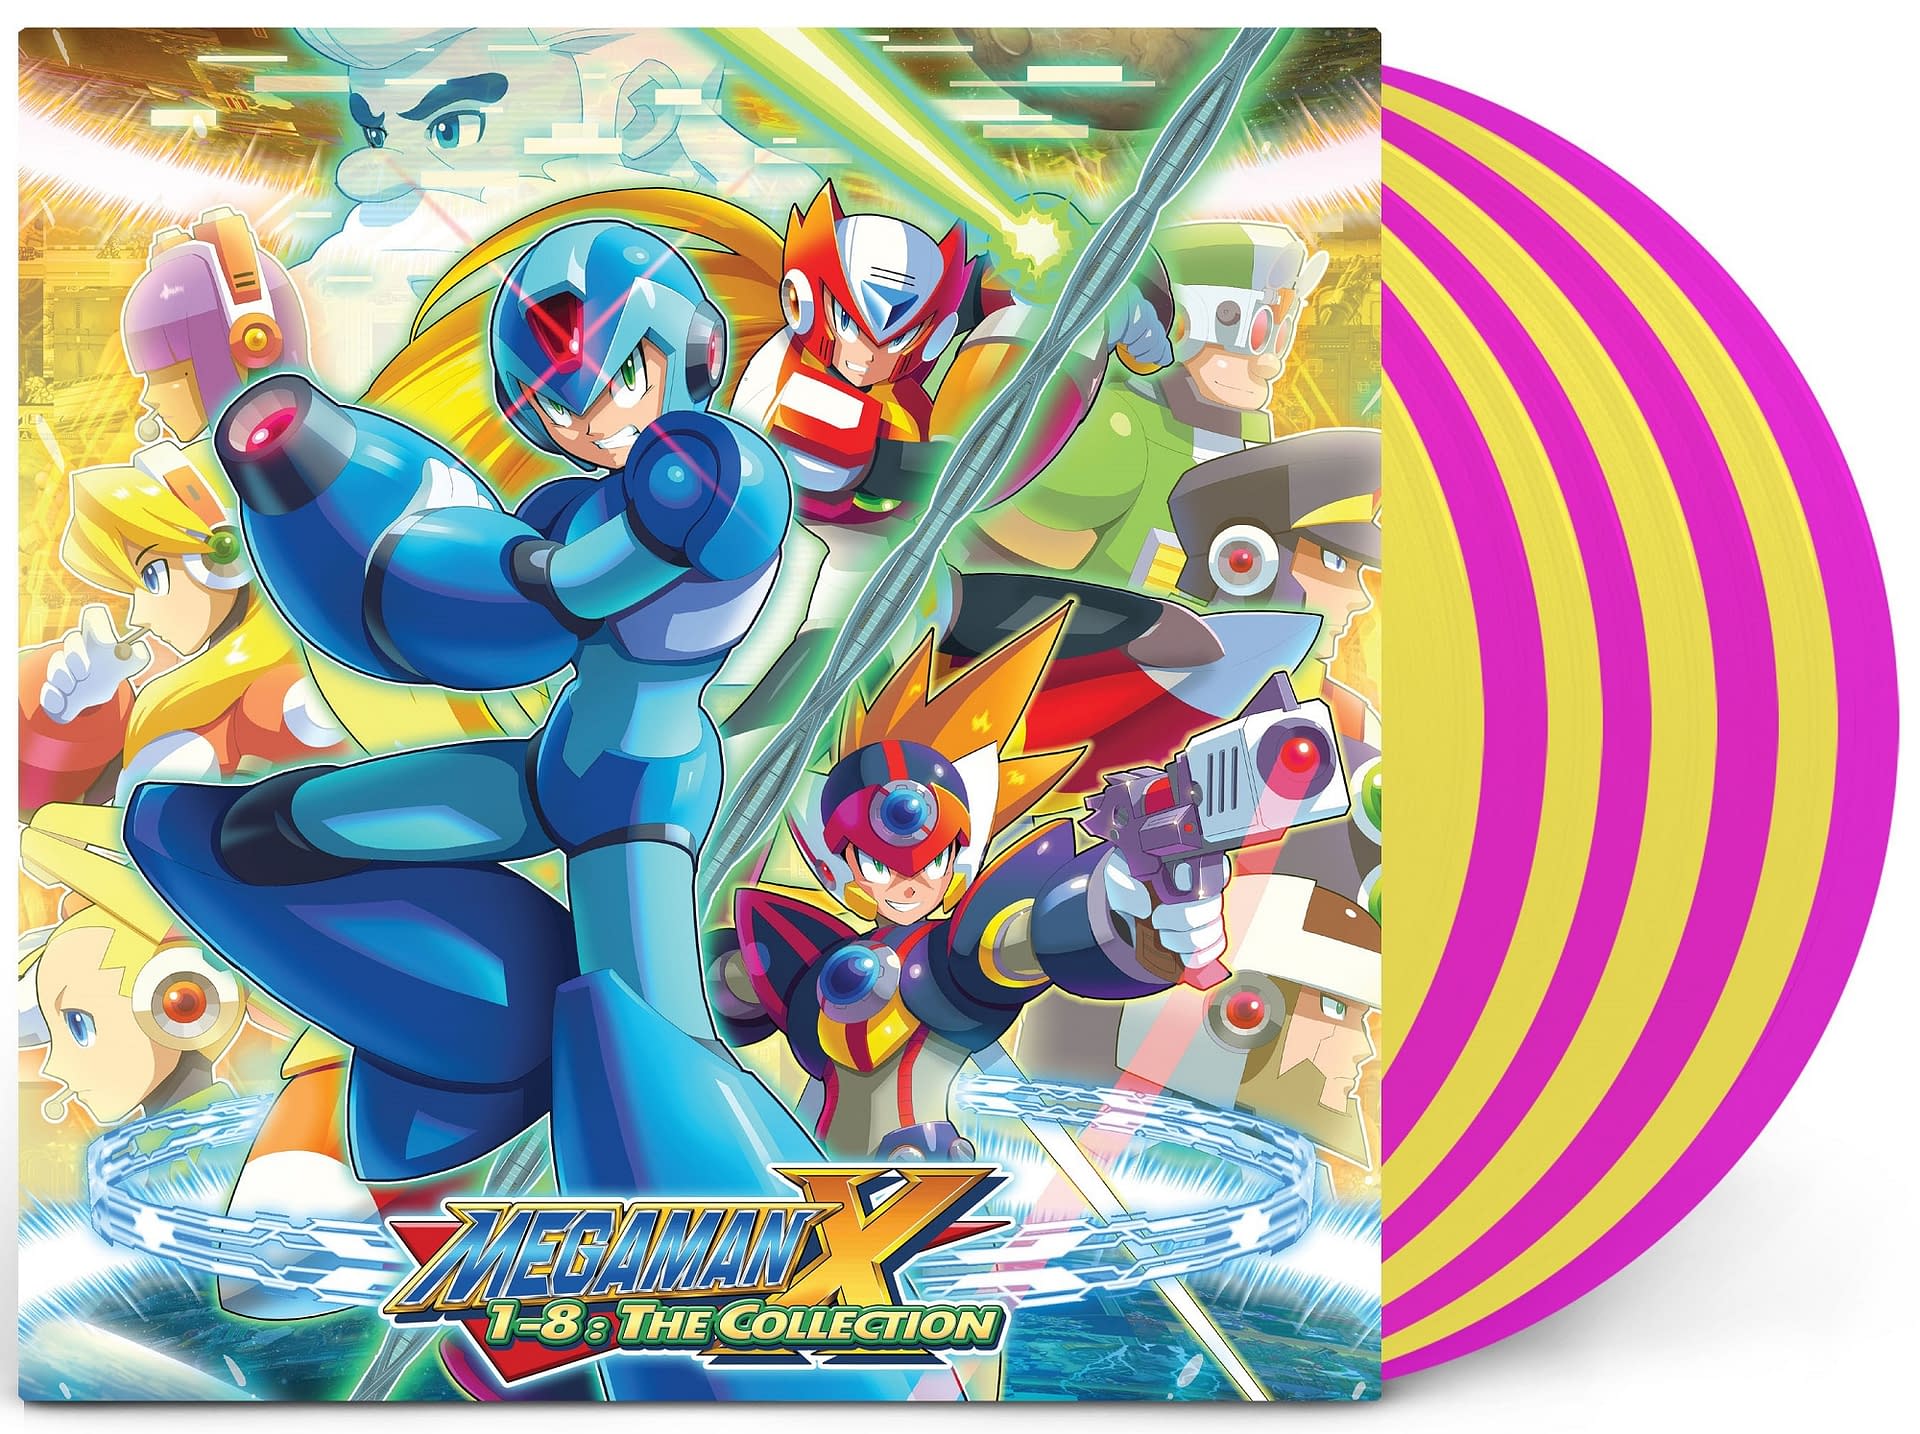 The Mega Man X Series Is Getting A Vinyl Soundtrack